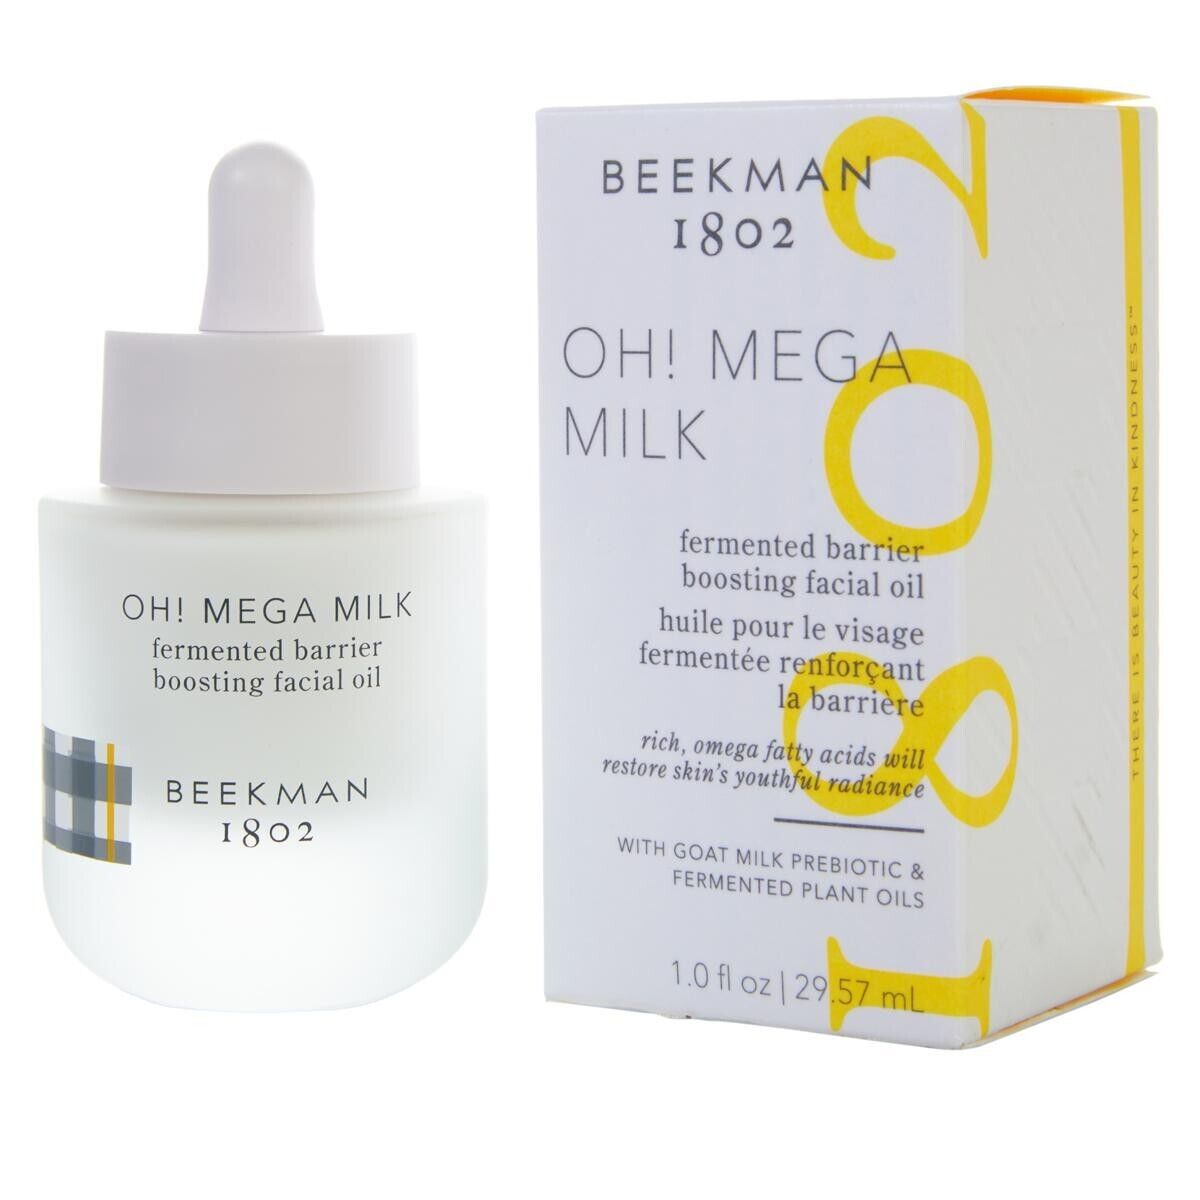 Beekman 1802 OH! Mega Milk Fermented barrier boosting facial oil 1.0 fl oz. New